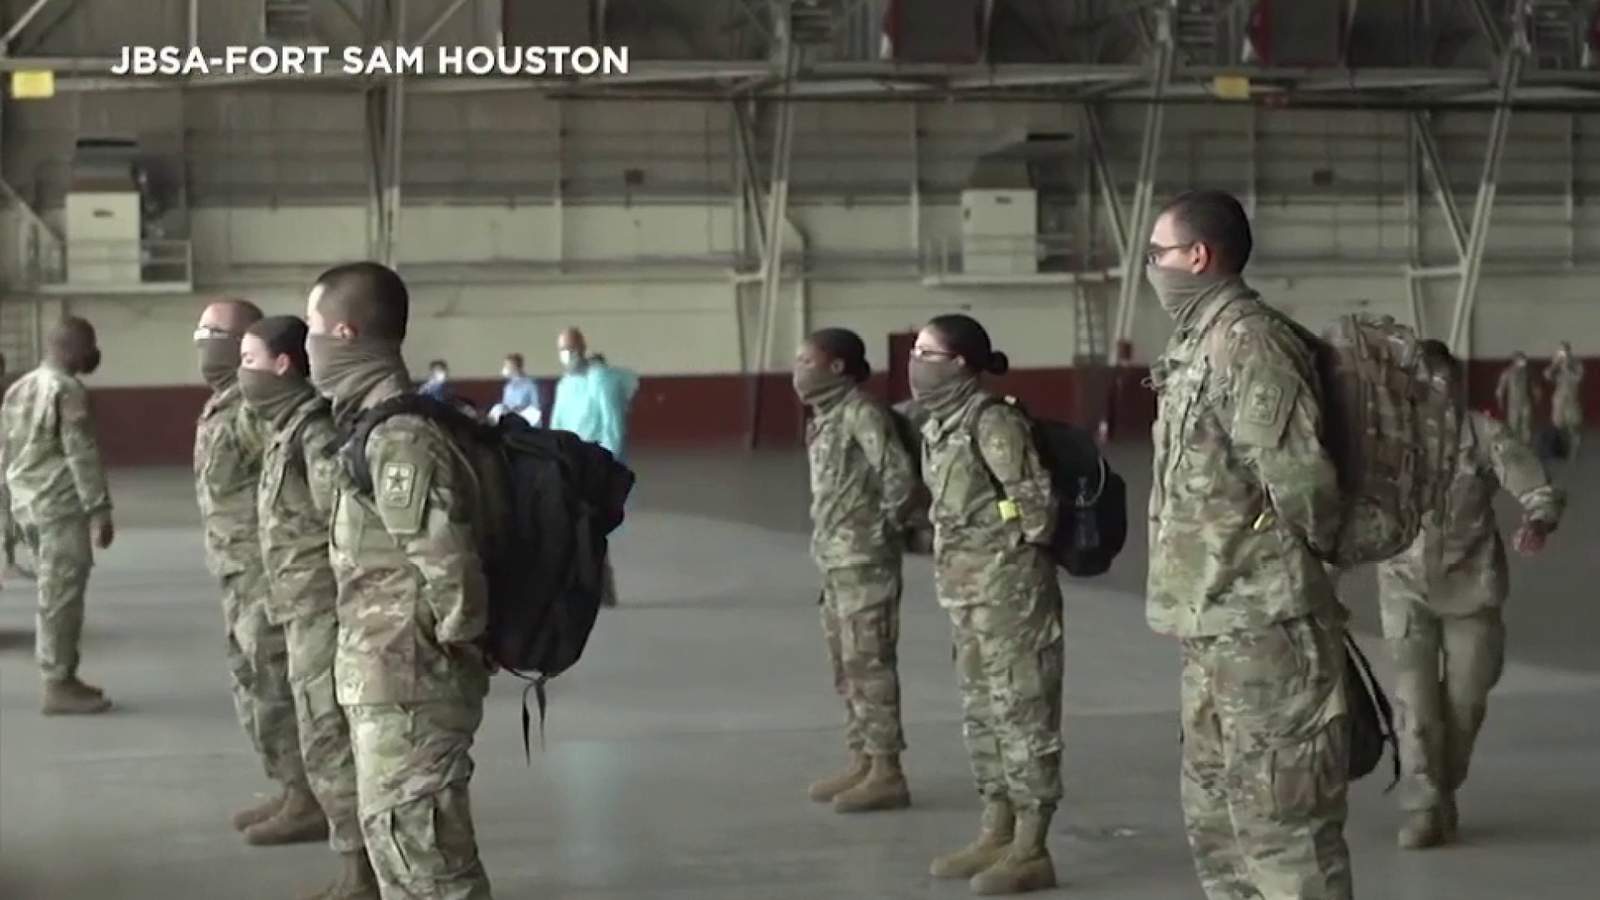 More than 150 basic combat training graduates arrive at JBSA-Fort Sam Houston